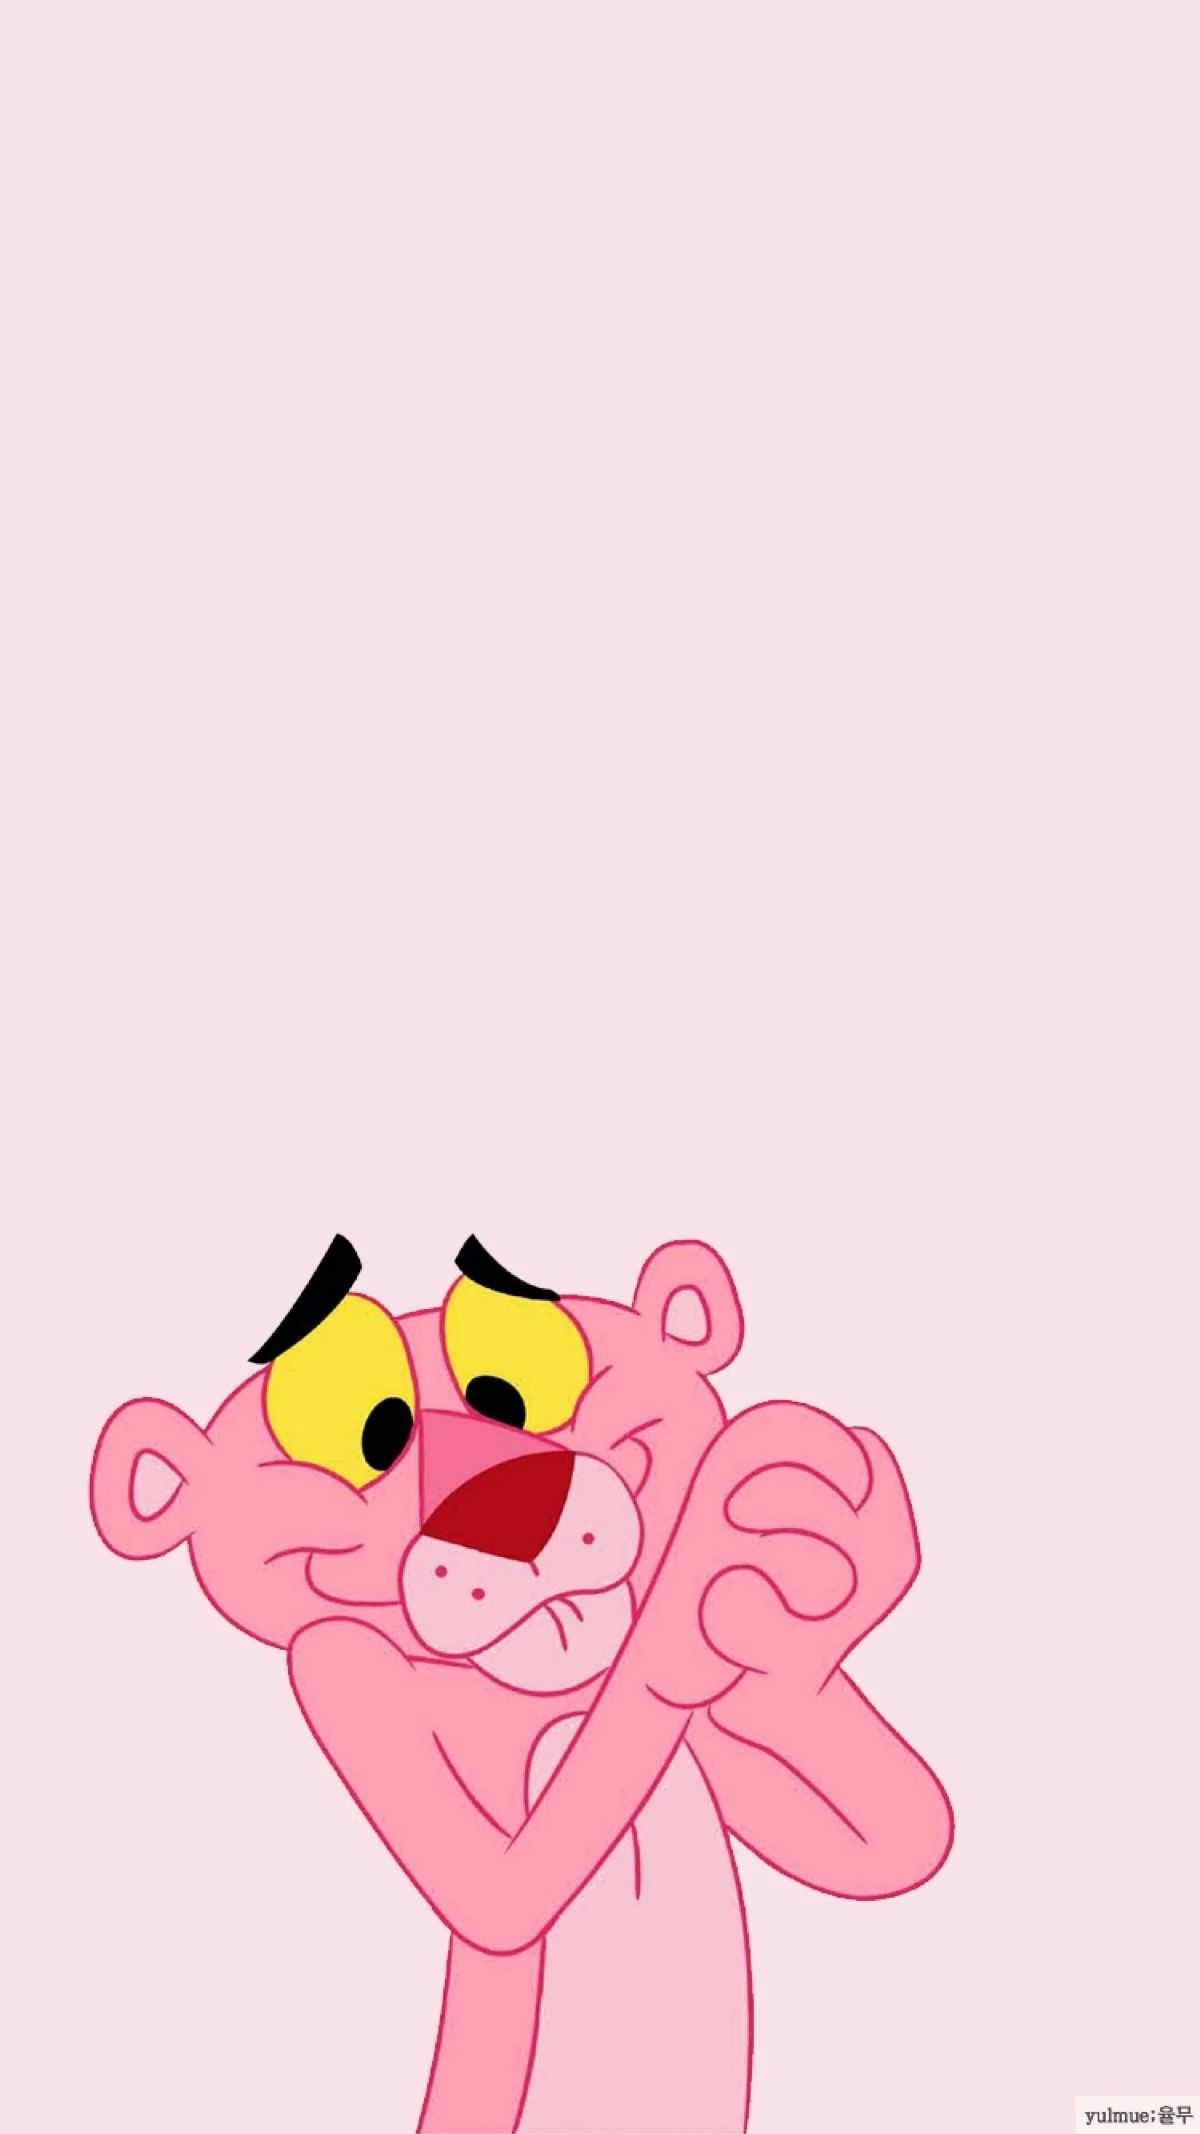 Pink Panther wallpaper. Cartoon wallpaper iphone, Funny wallpaper, Wallpaper iphone cute